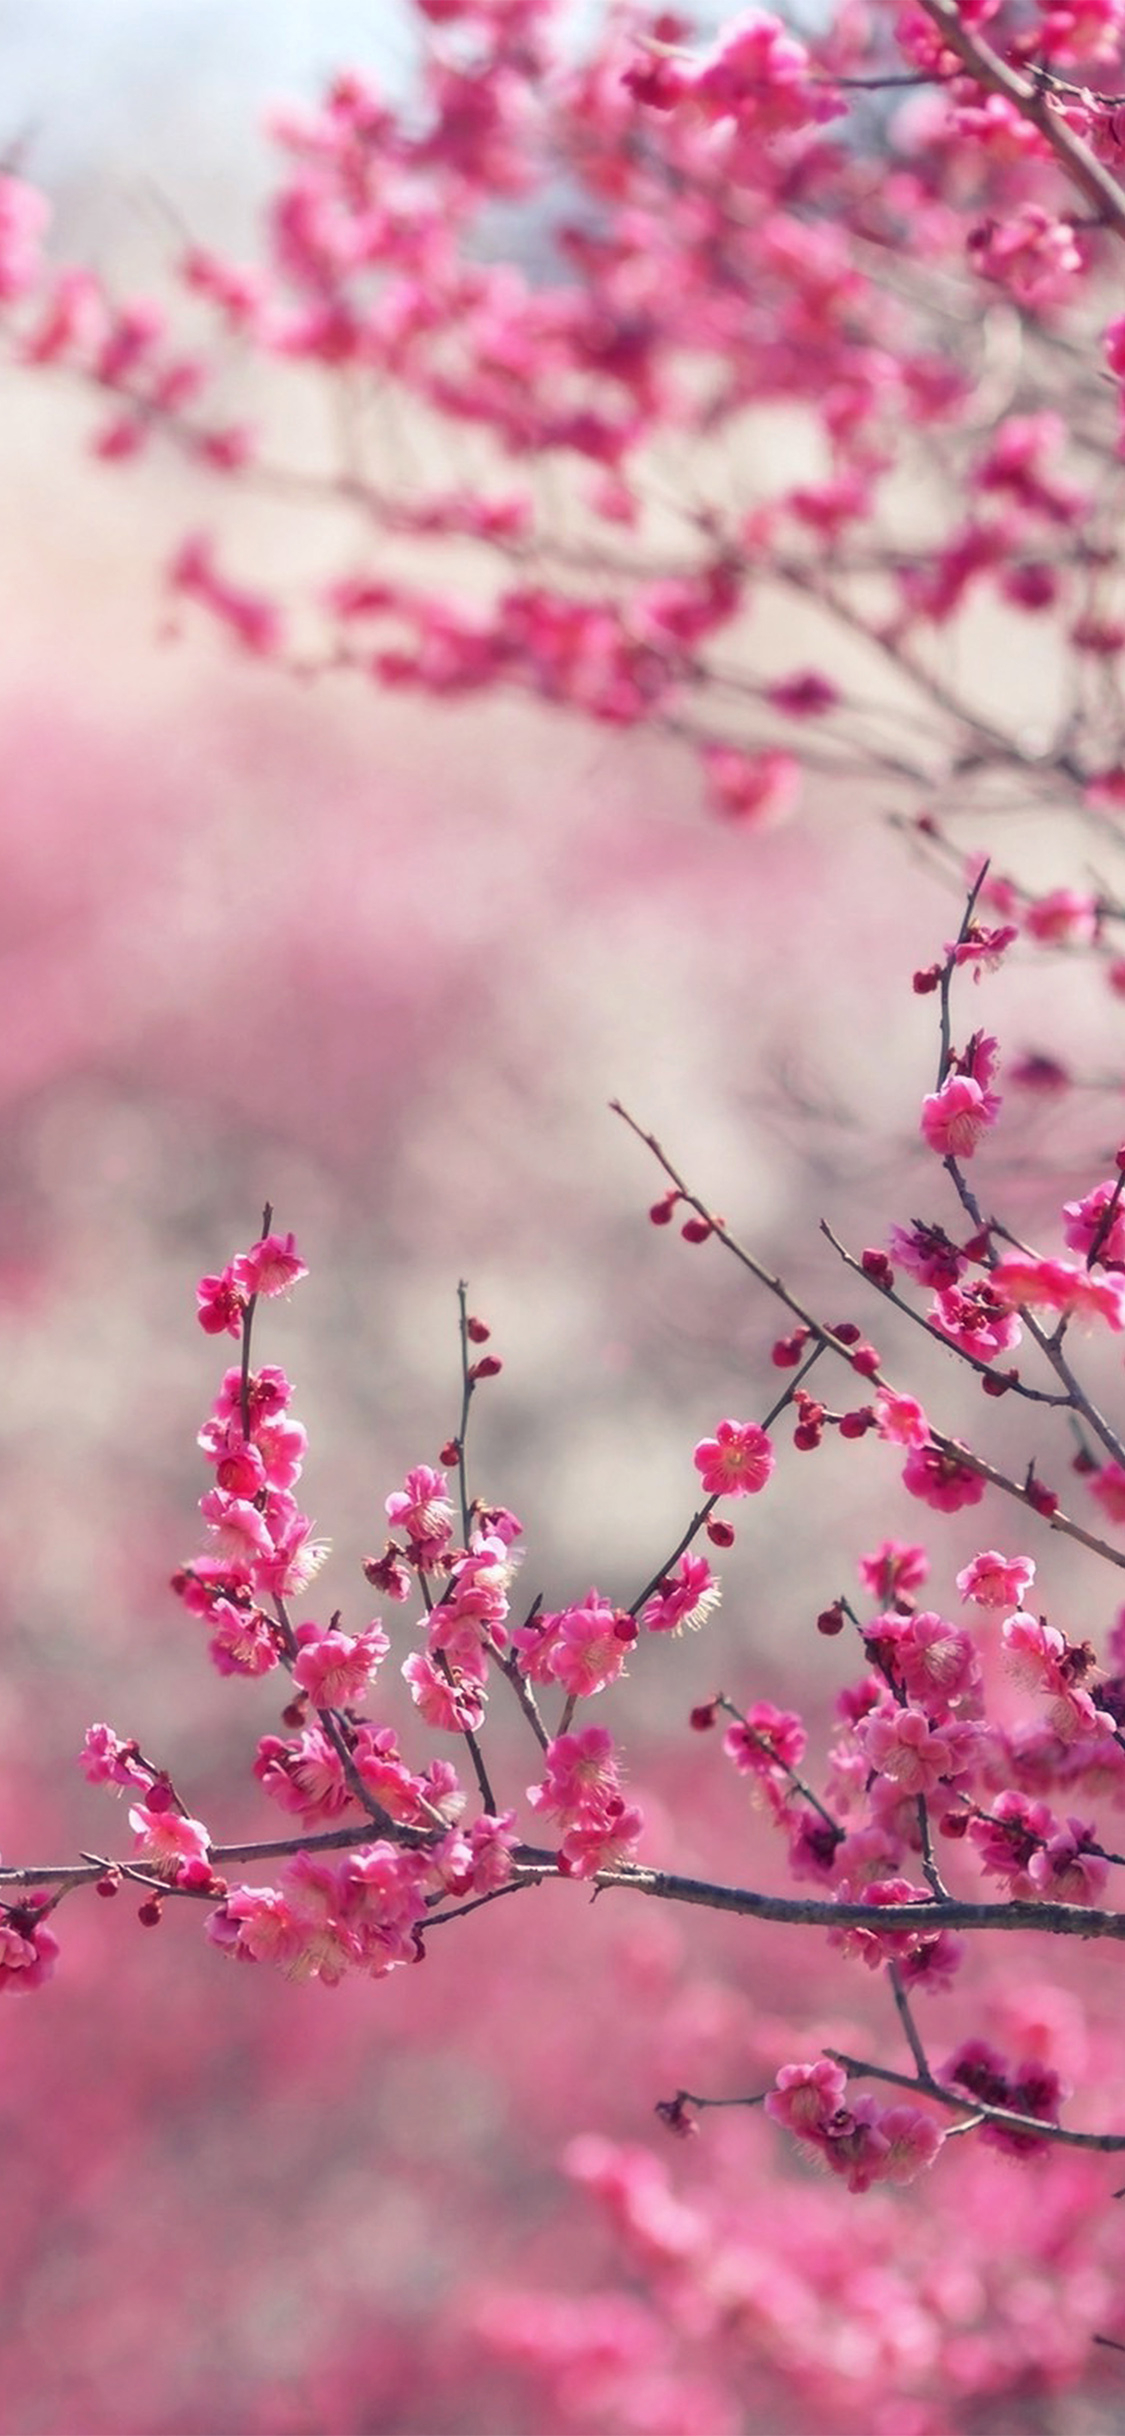 1125x2436 | iPhone X wallpaper | nf15-pink-blossom-natureflower-spring-love